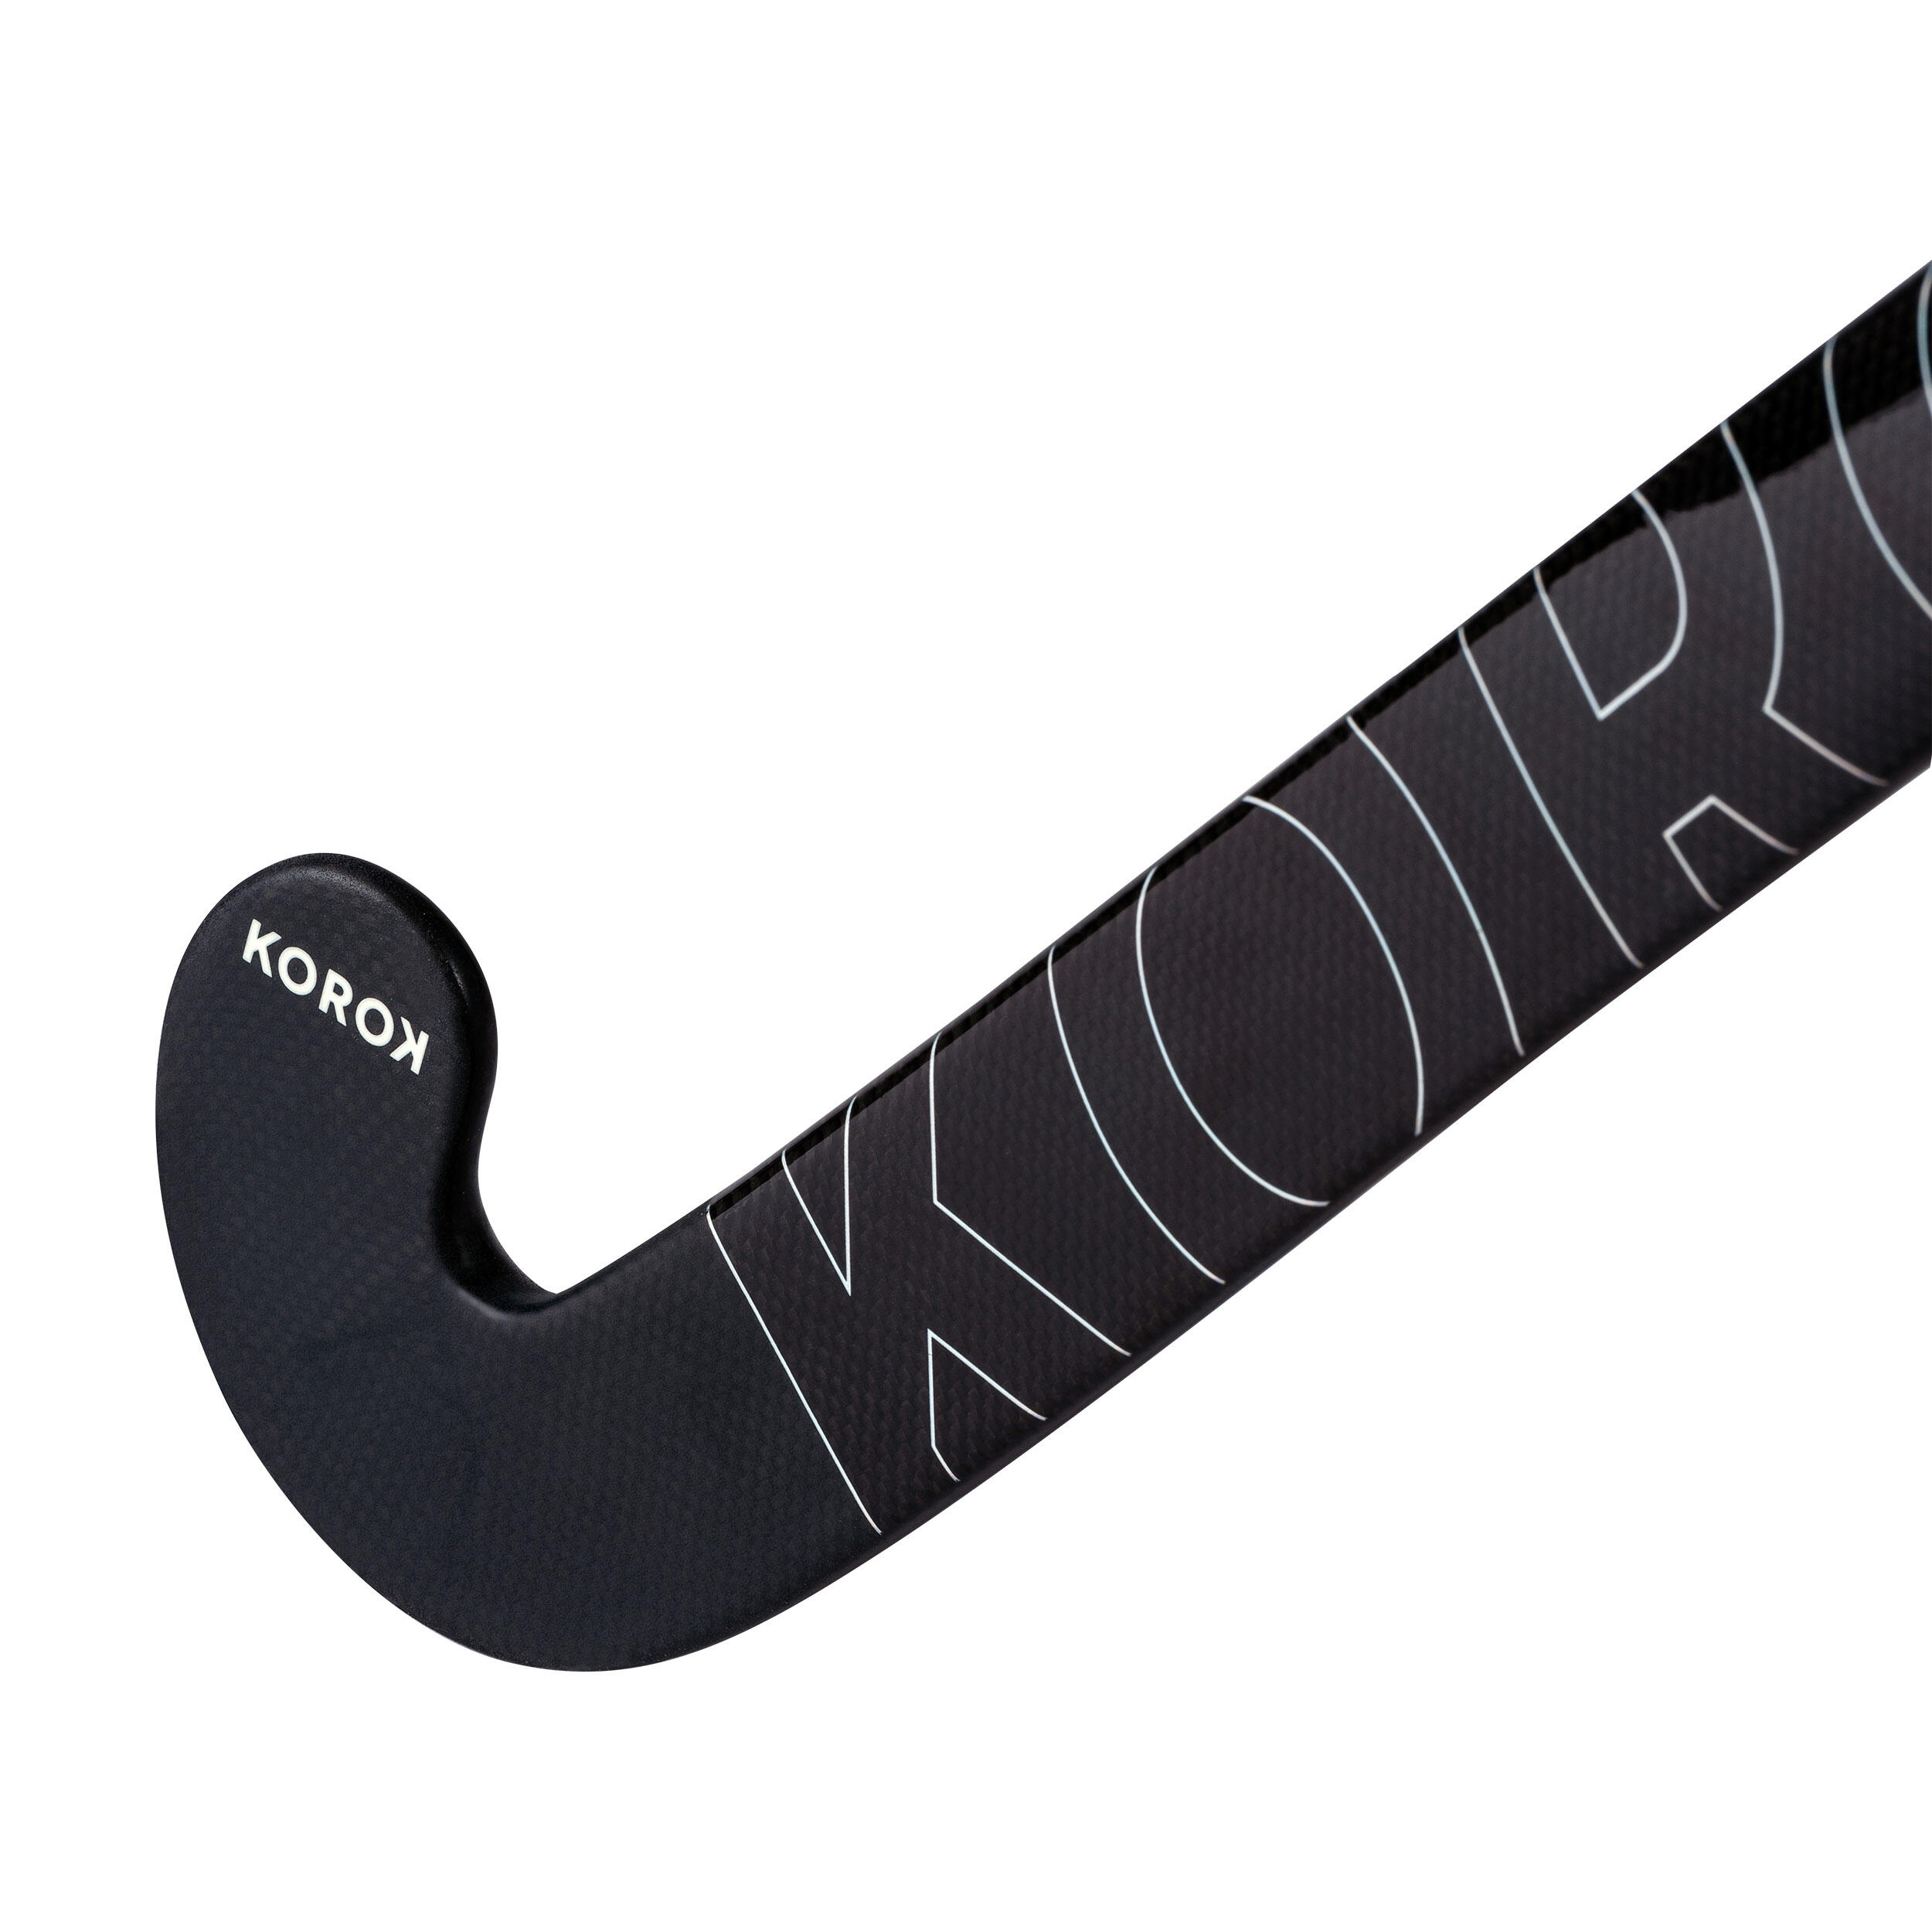 Adult Intermediate 60% Carbon Low Bow Field Hockey Stick FH560 - Black/Grey 2/12